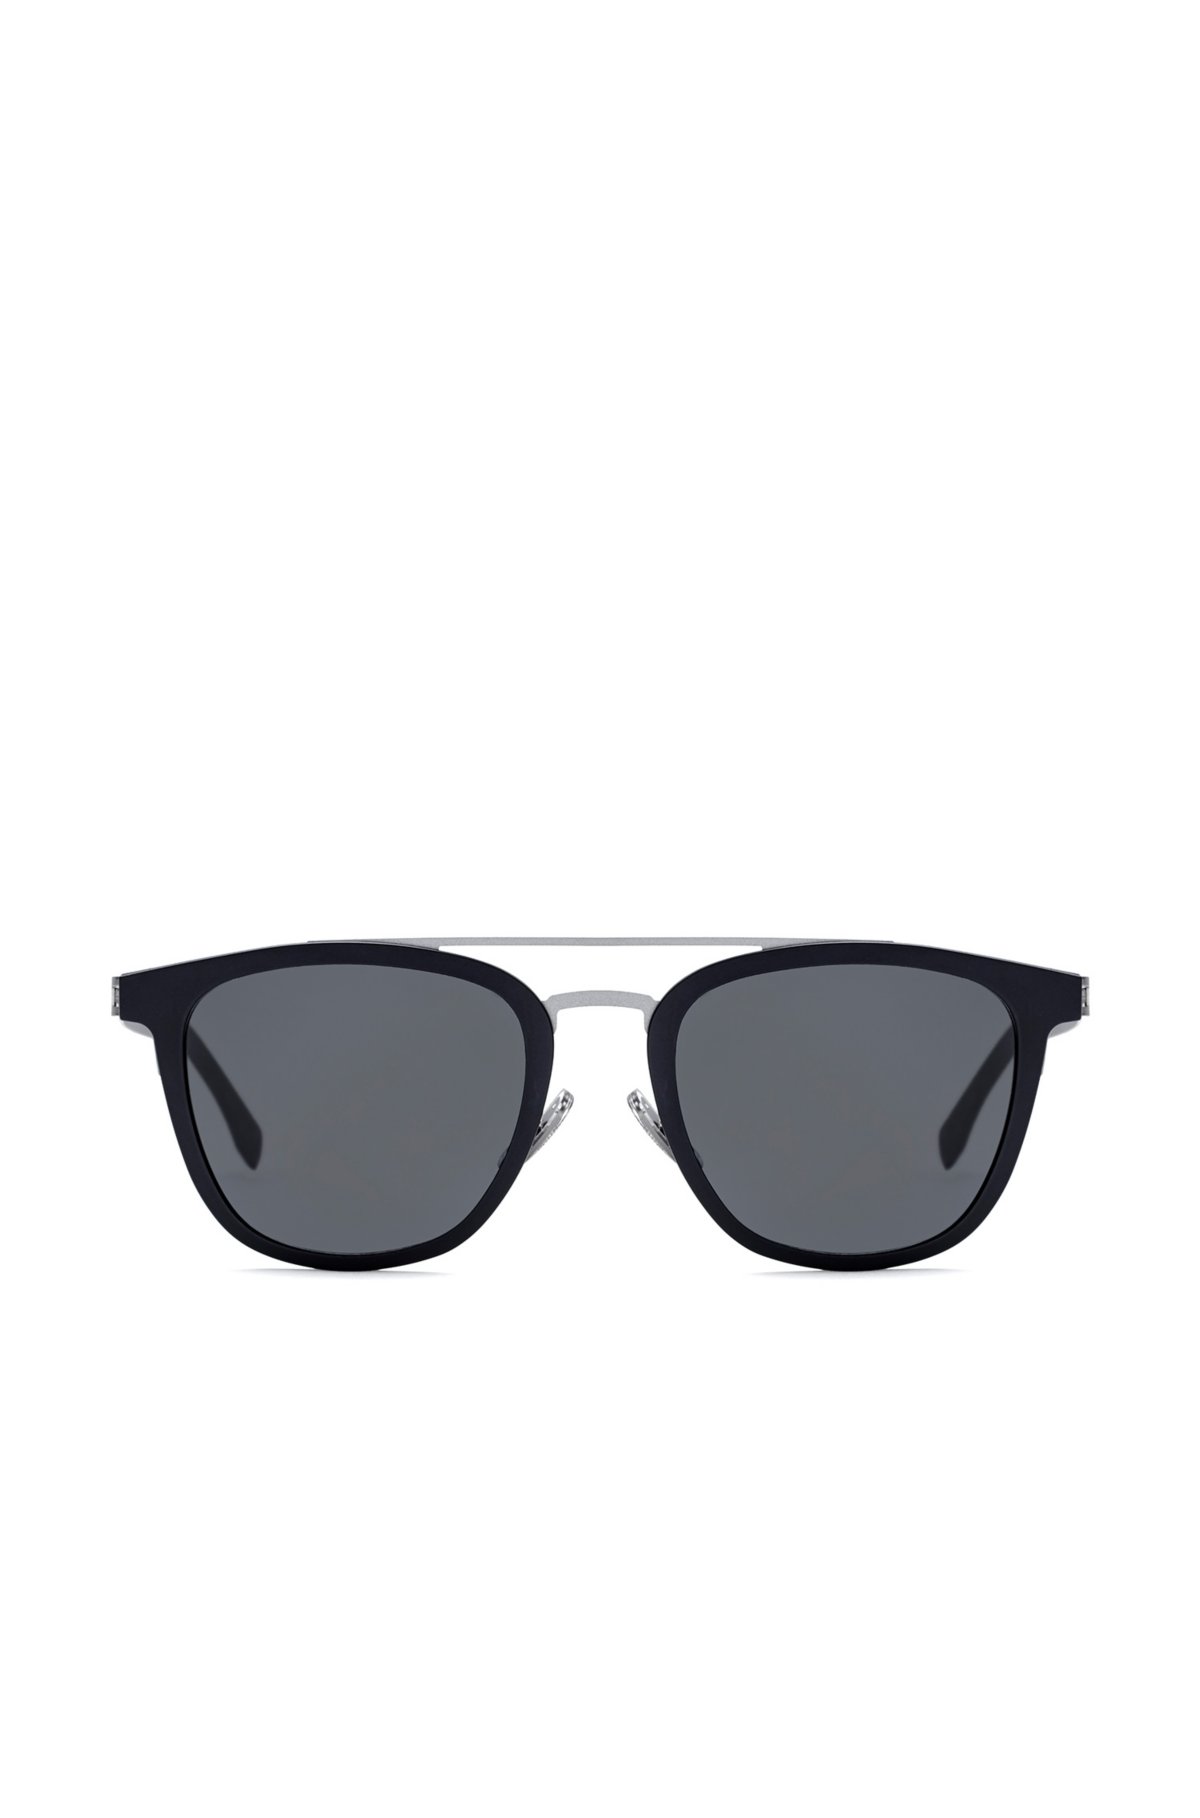 BOSS - Acetate Stainless Steel Round Sunglasses | BOSS 0838S